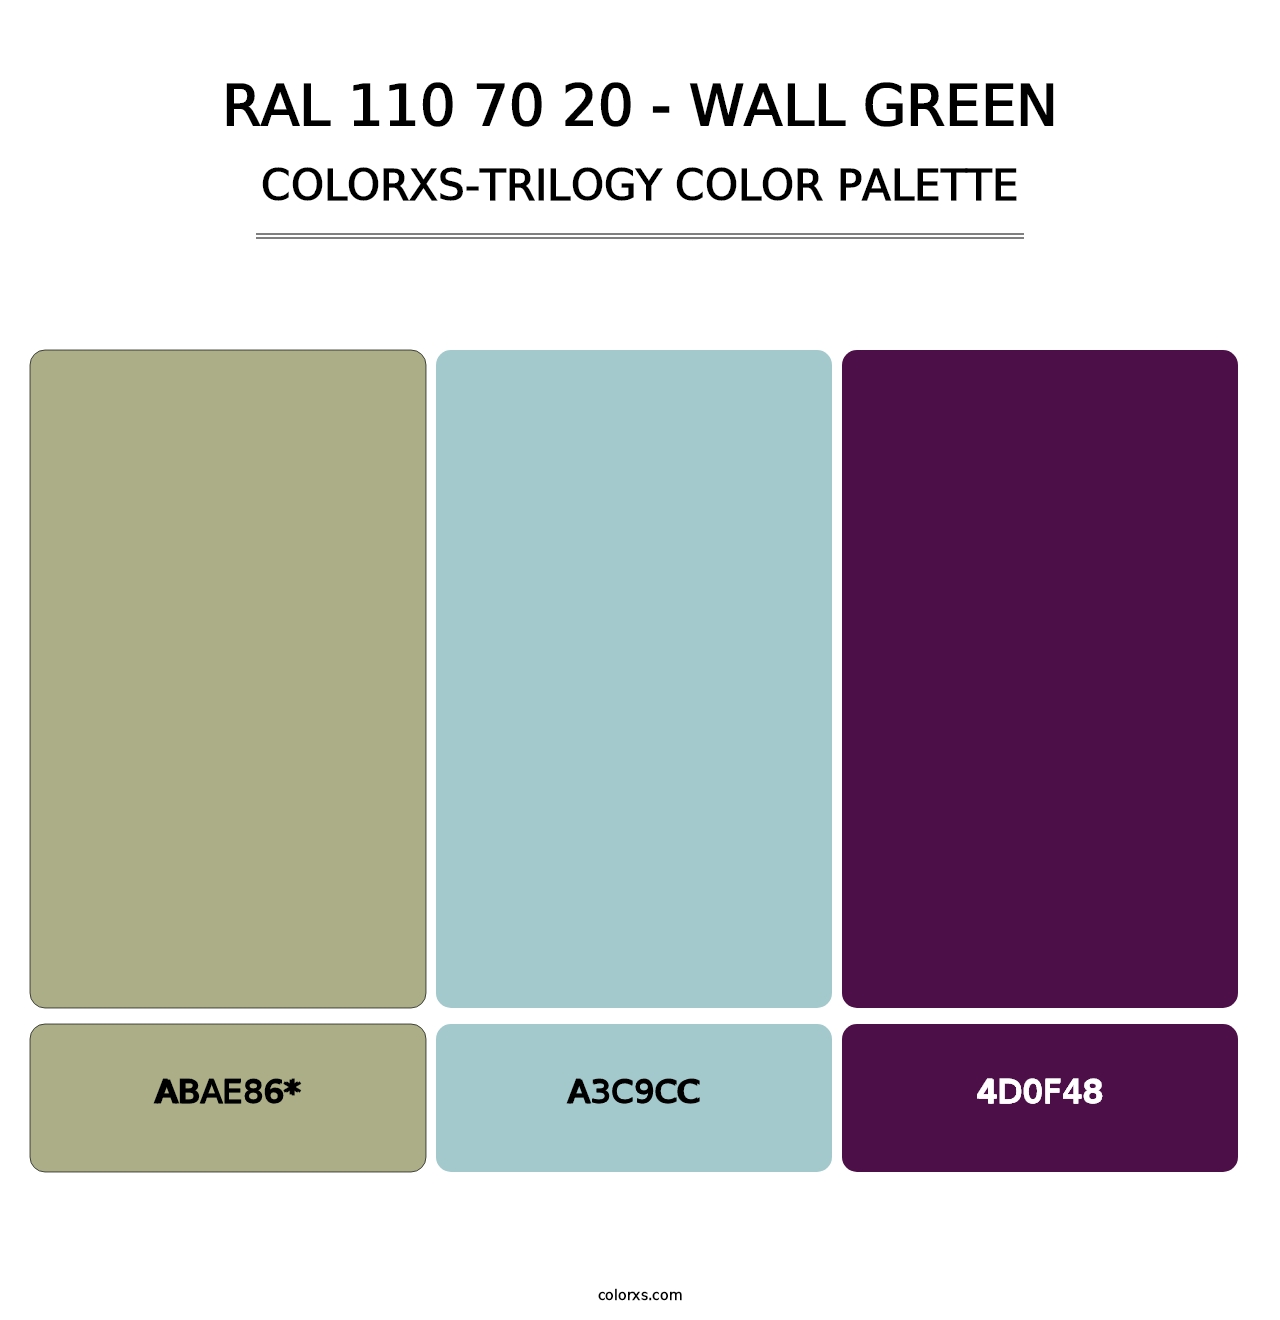 RAL 110 70 20 - Wall Green - Colorxs Trilogy Palette